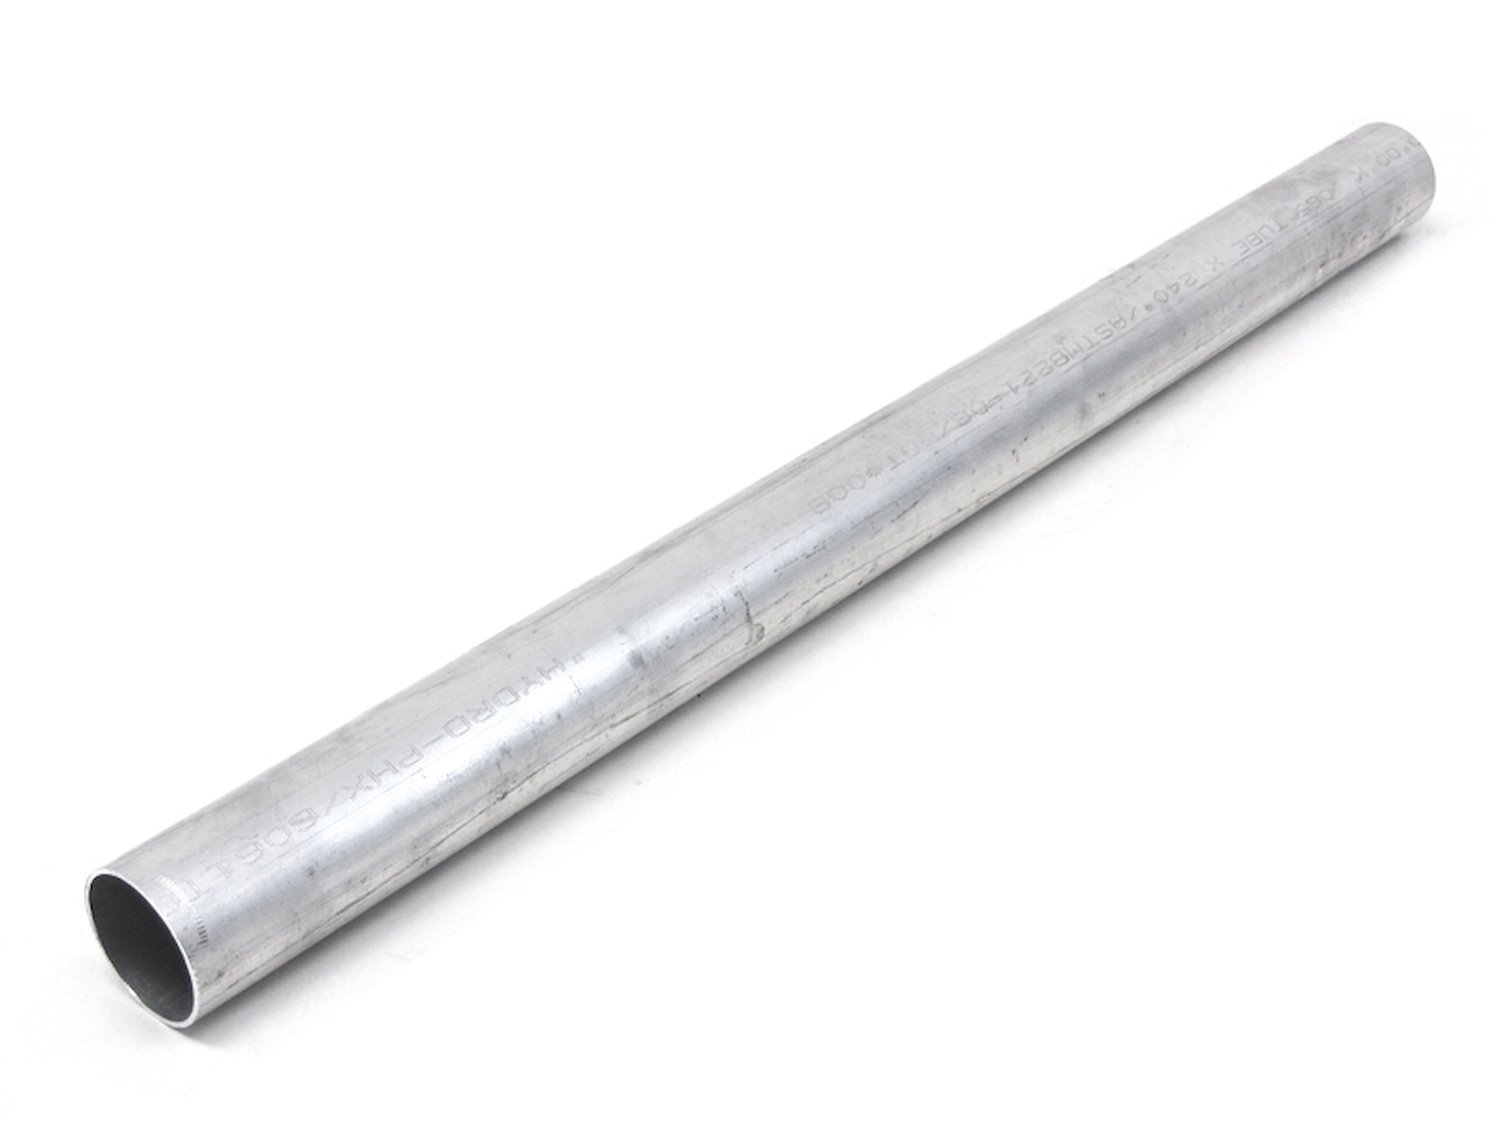 AST-3F-050 Aluminum Tubing, 6061 Aluminum, Straight Tubing, 1/2 in. OD, Seamless, Raw Finish, 3 ft. Long